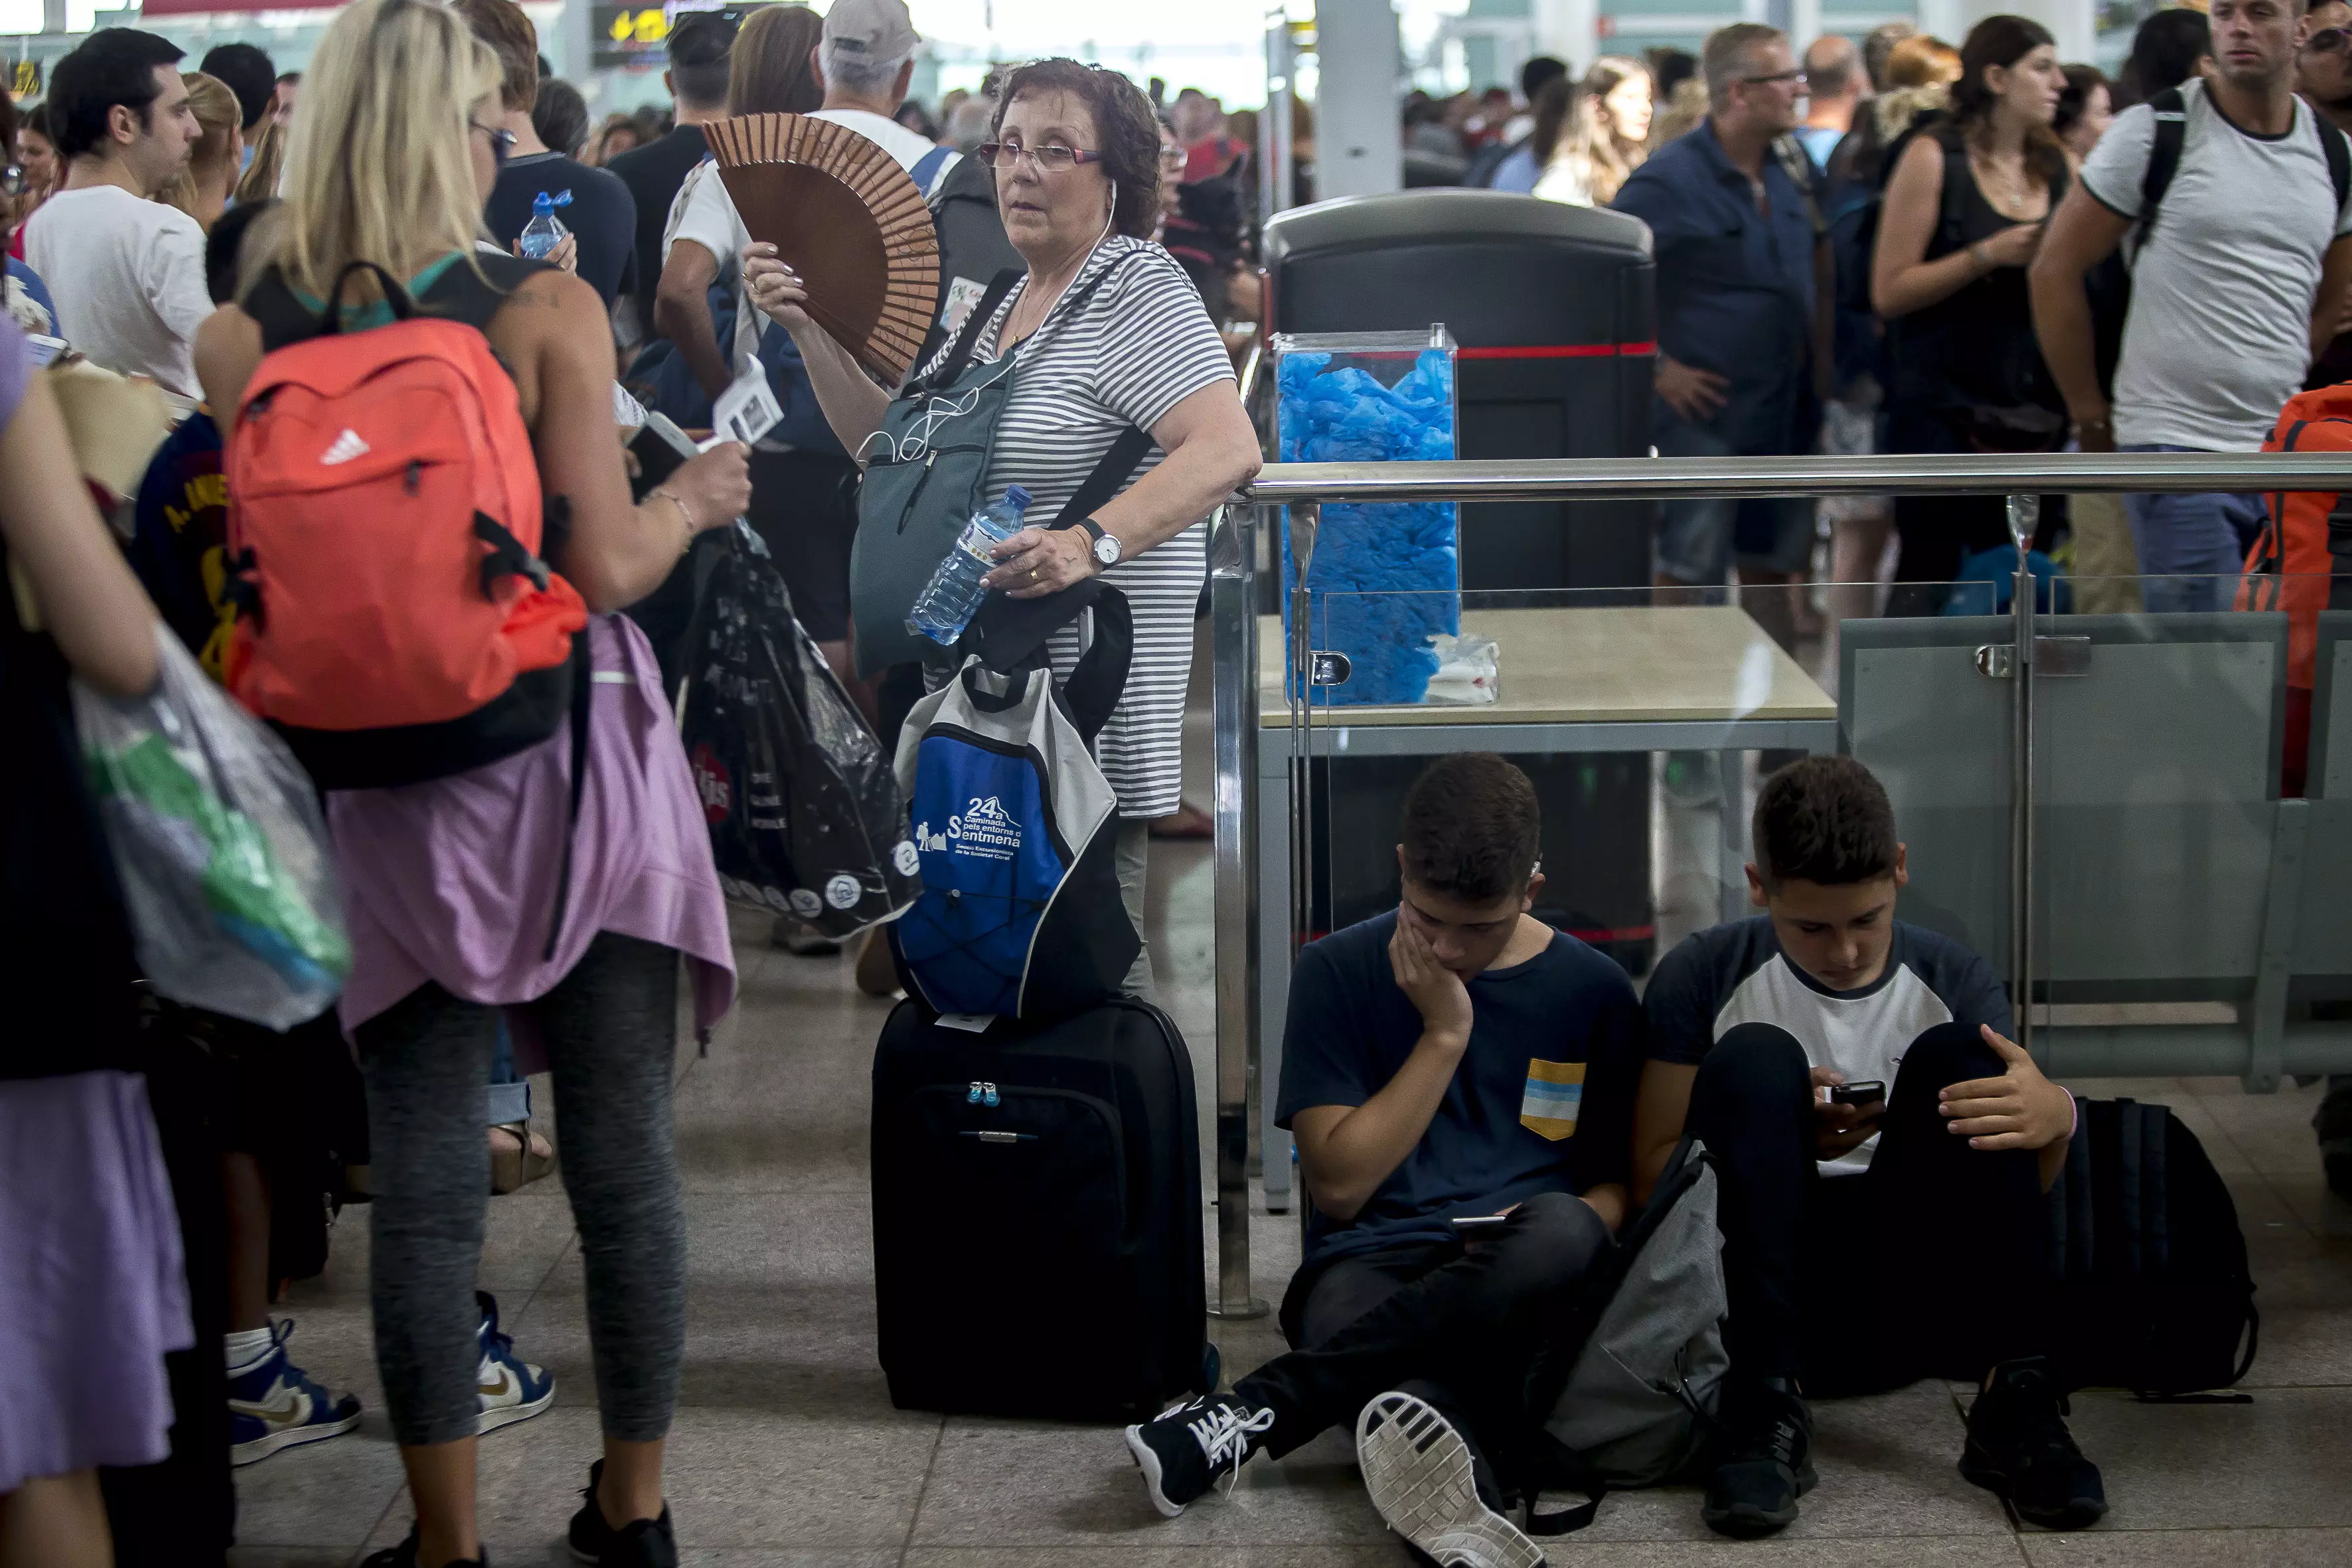 These were the scenes in Barcelona's airport in El Prat de Llobregat during a 2017 staff strike.